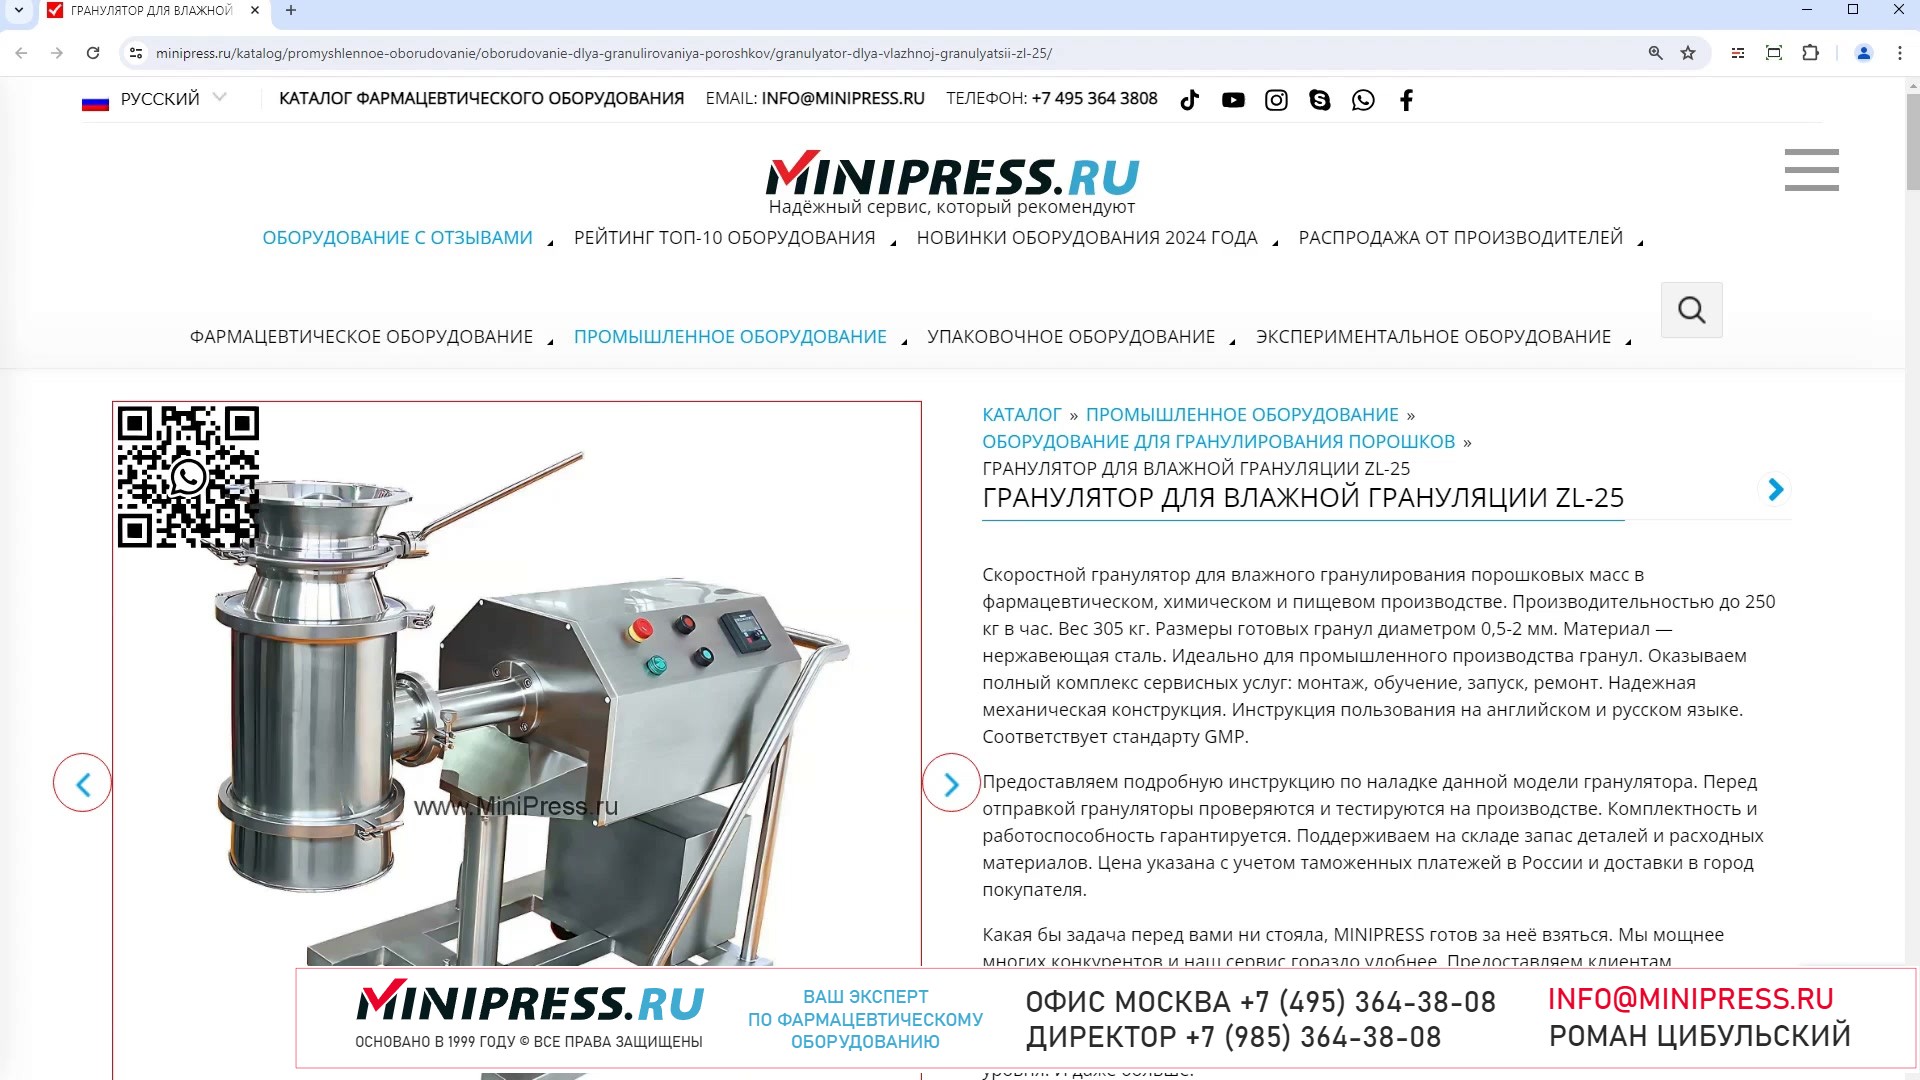 Minipress.ru Гранулятор для влажной грануляции ZL-25